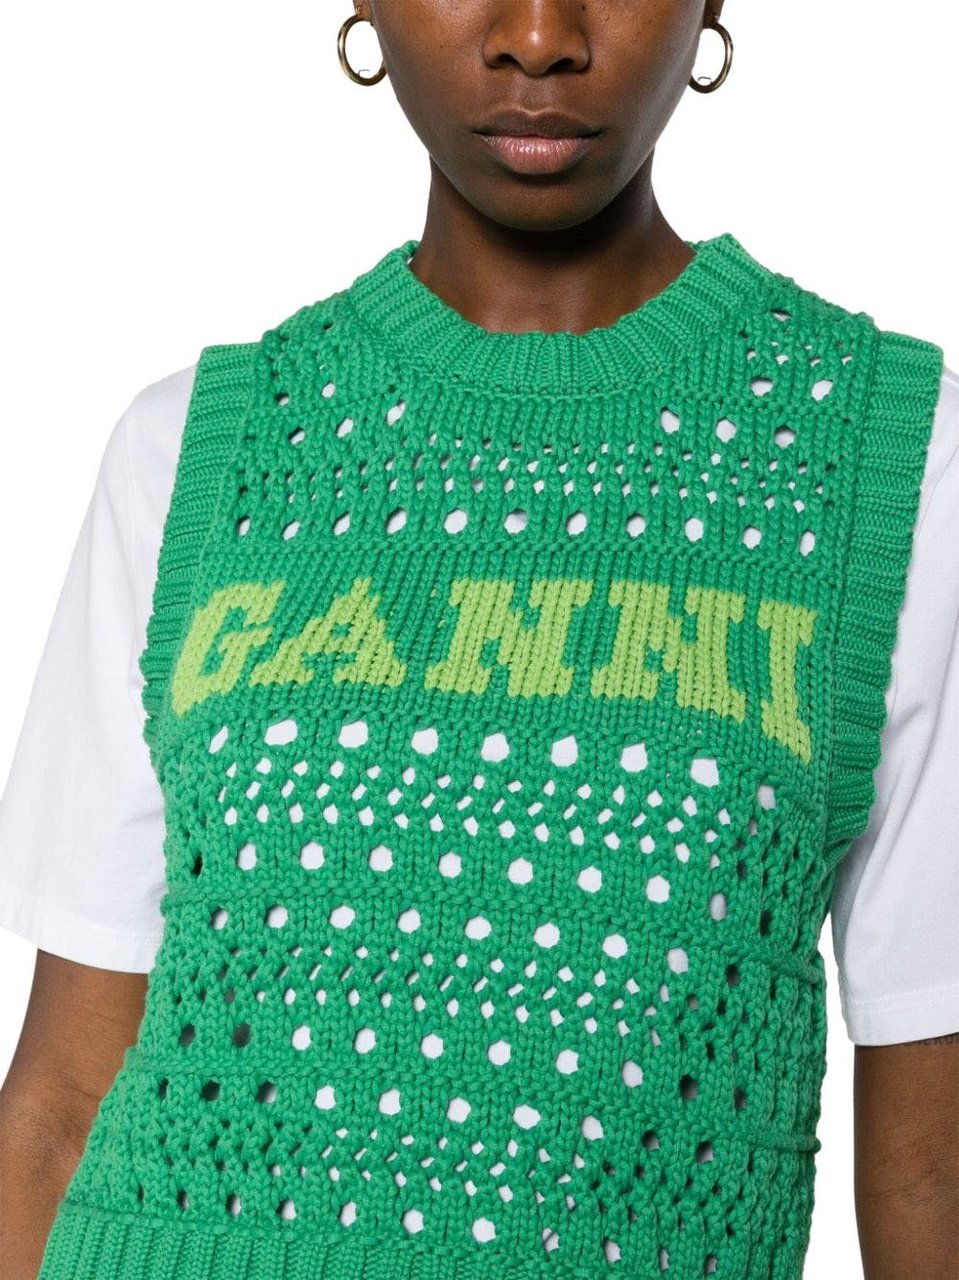 Ganni Sweaters Green Groen